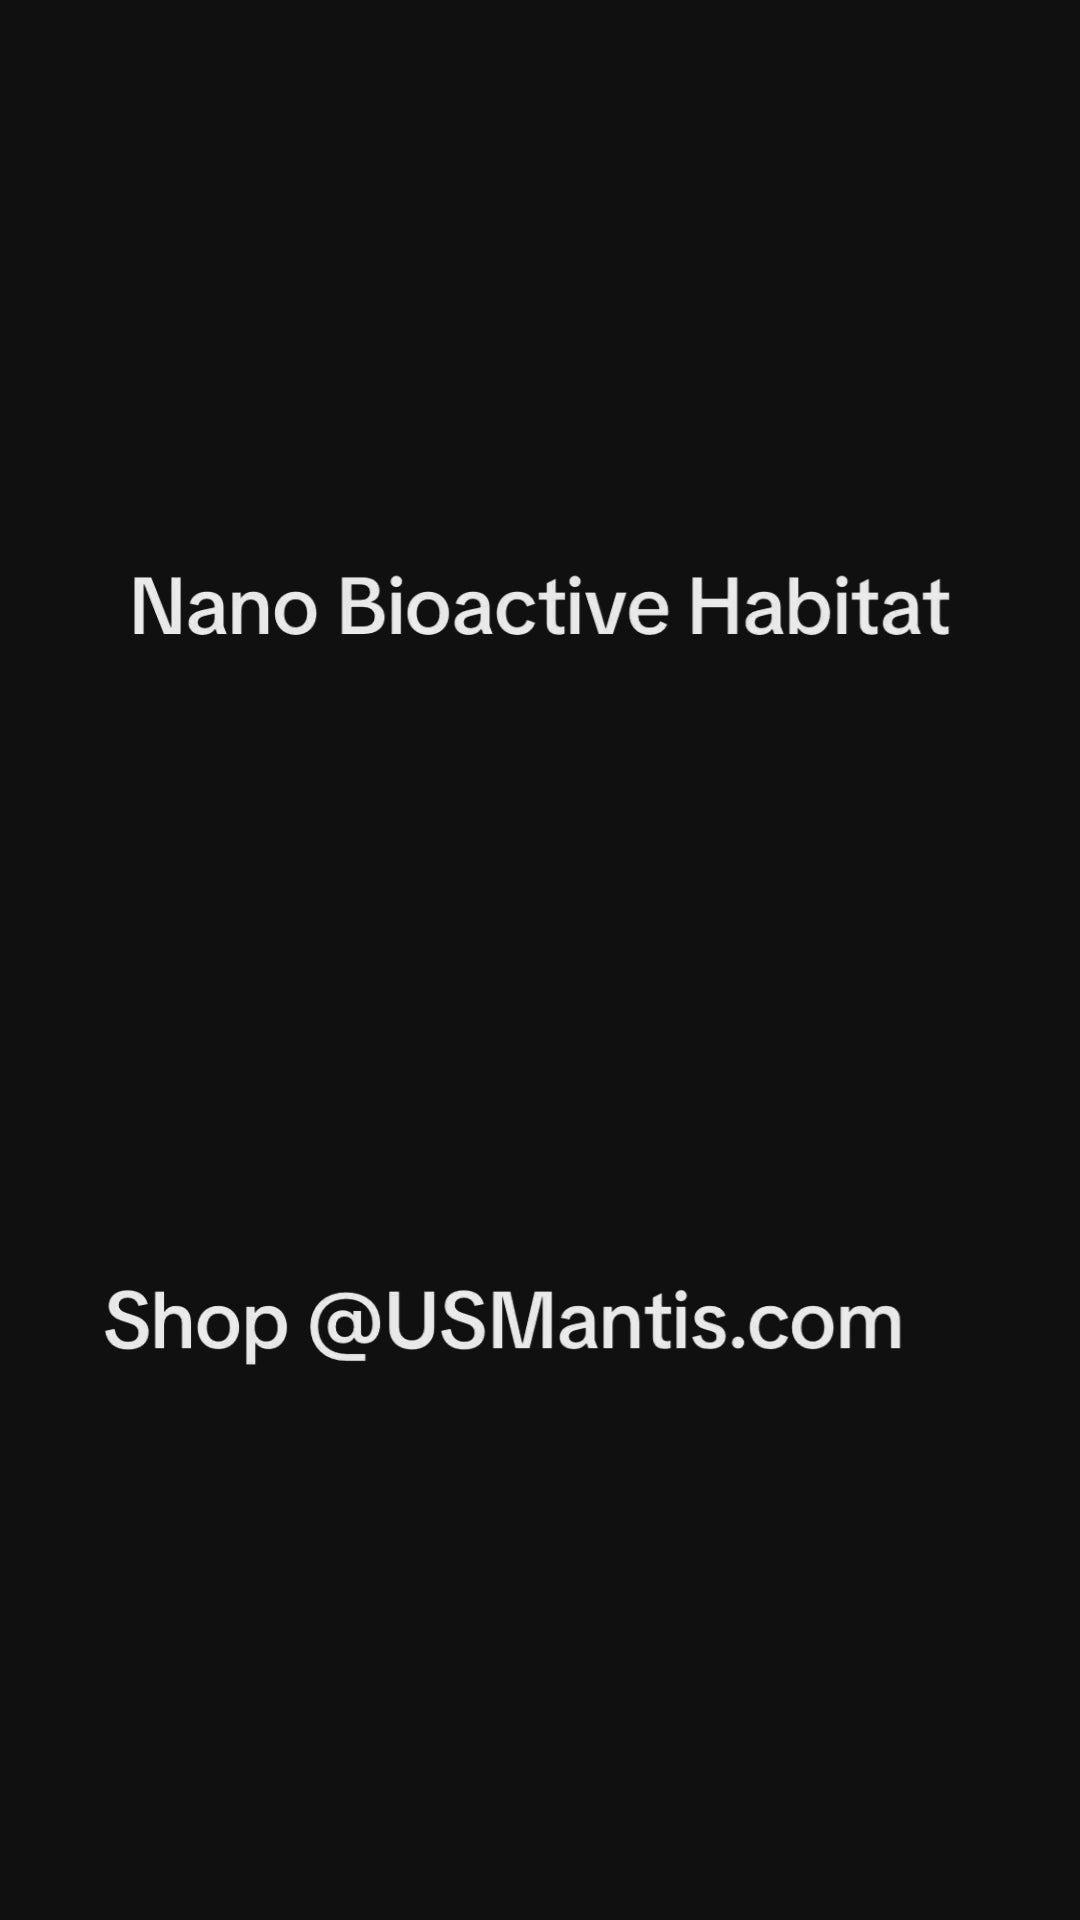 Ultimate Cribs Praying Mantis Invertebrates Habitat Bioactive Elite New! - USMANTIS